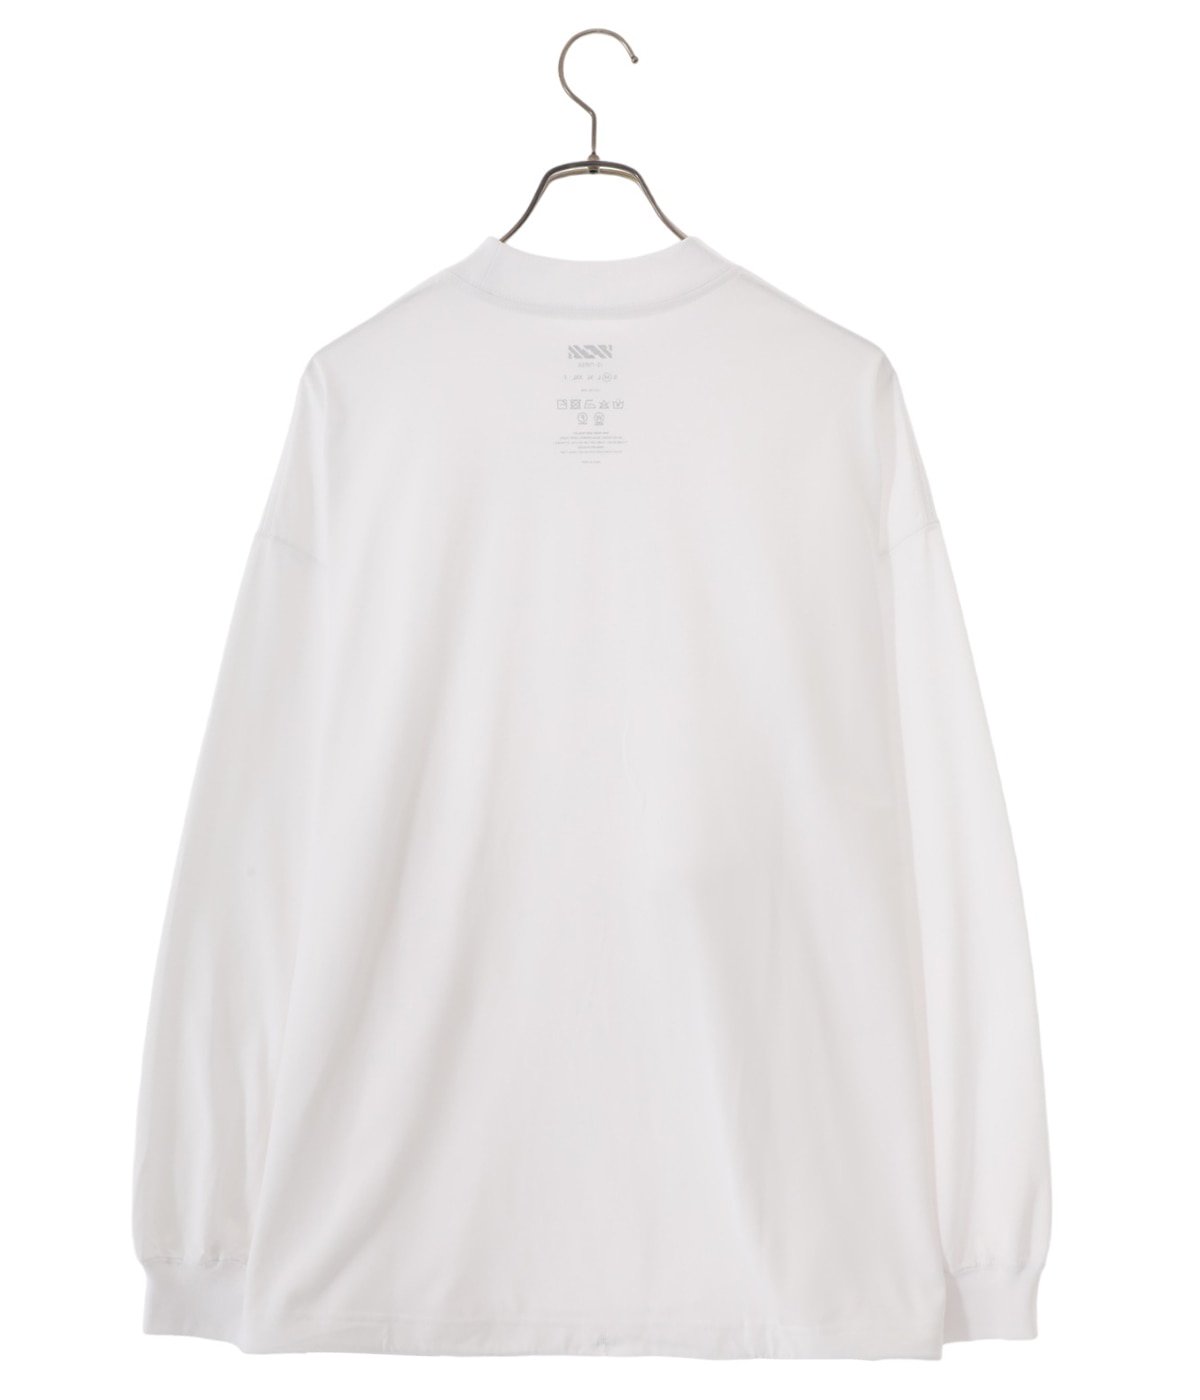 WhitesizeMBalloon t shirt for +81